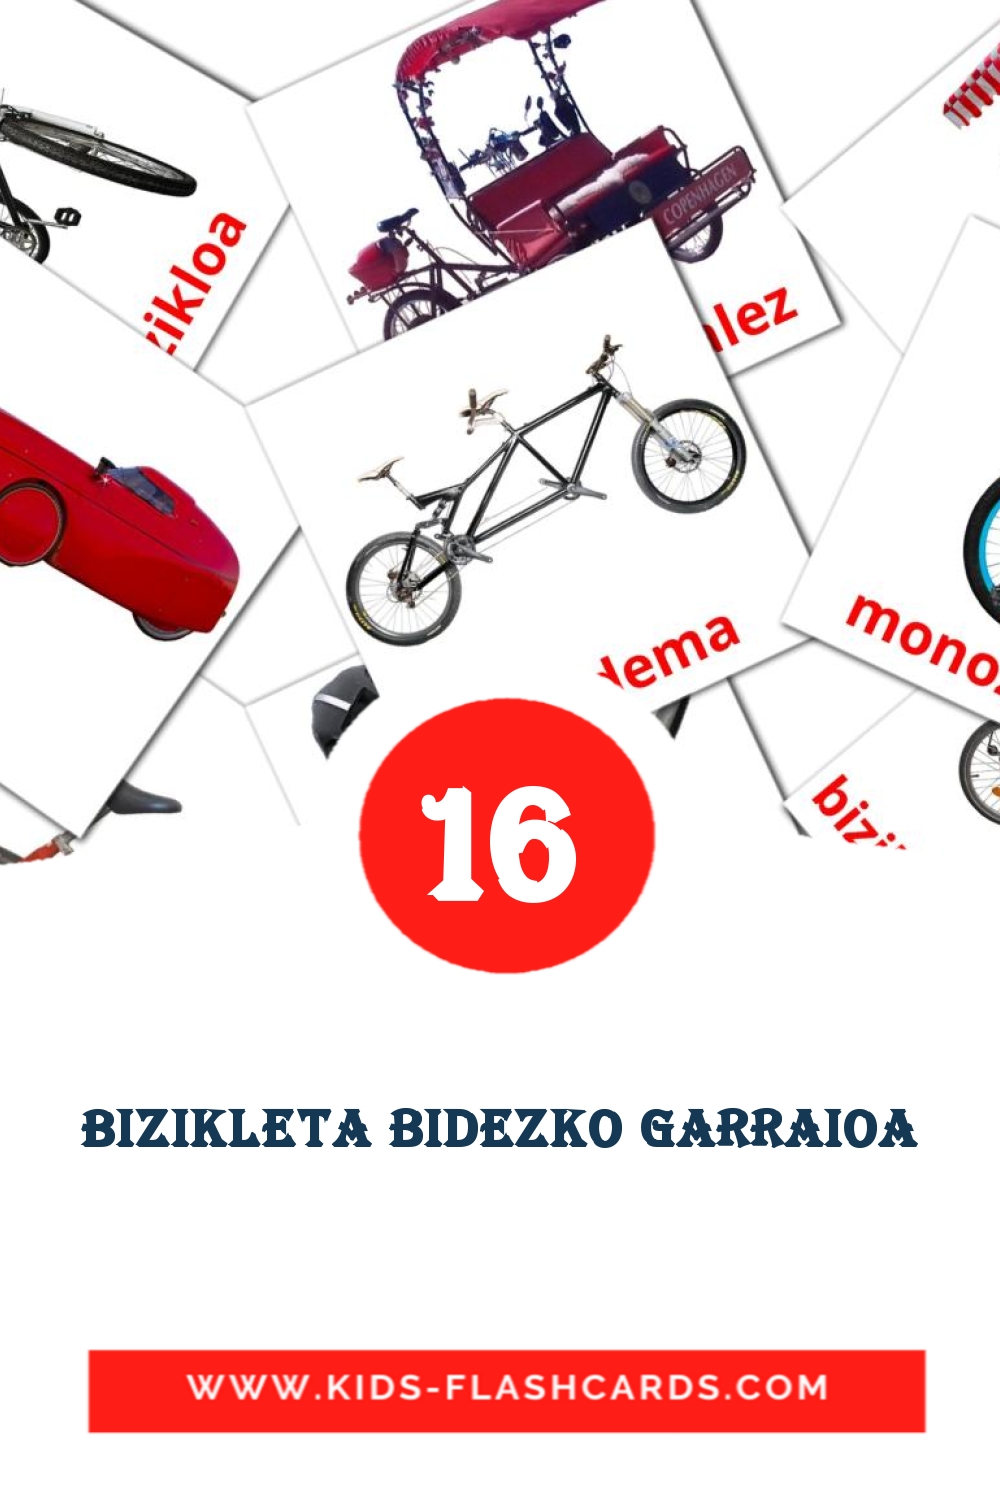 16 tarjetas didacticas de Bizikleta bidezko garraioa para el jardín de infancia en euskera